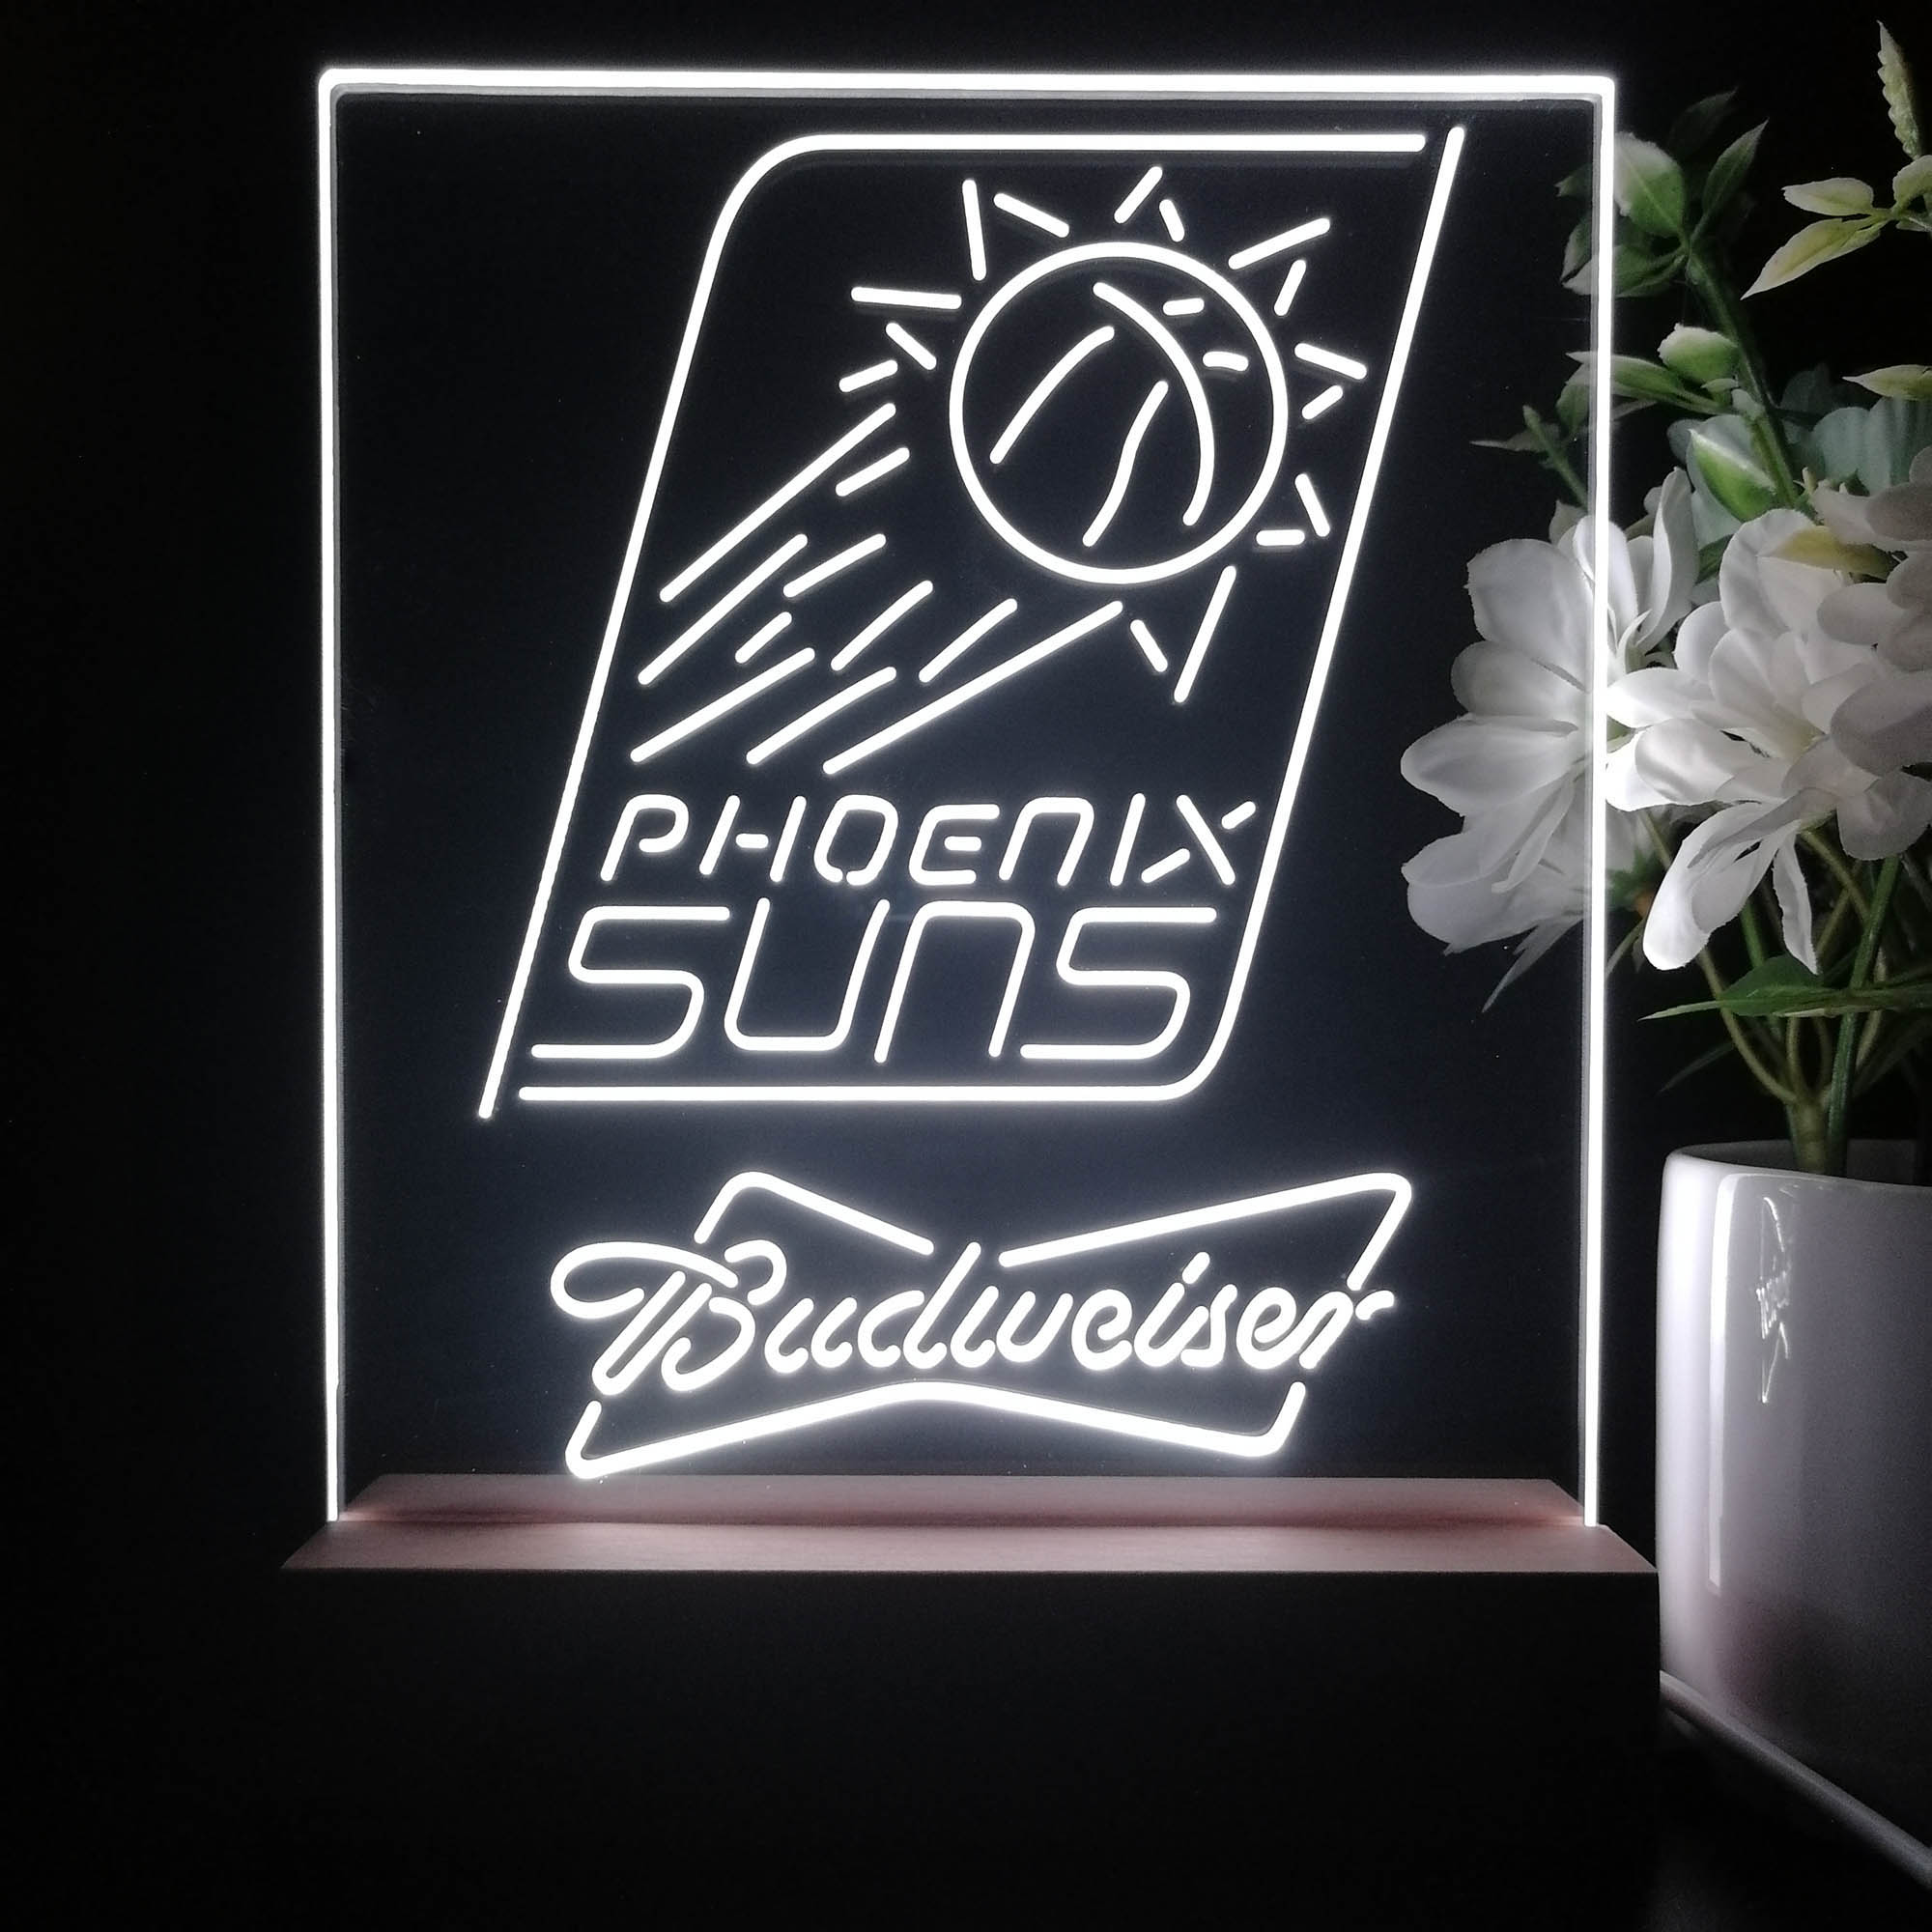 Phoenix Suns Budweiser Neon Sign Pub Bar Lamp